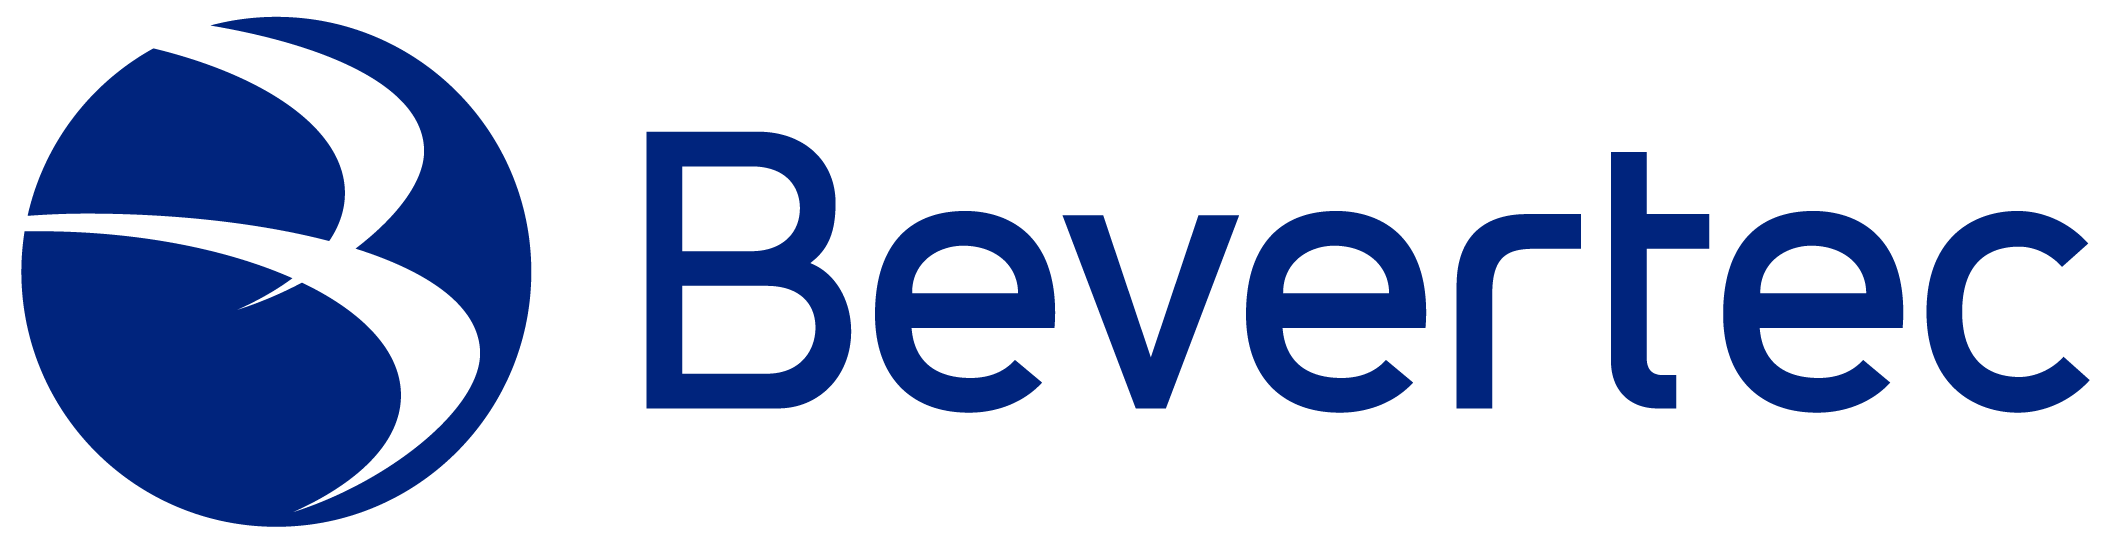 bevertec_logo-01[1].png